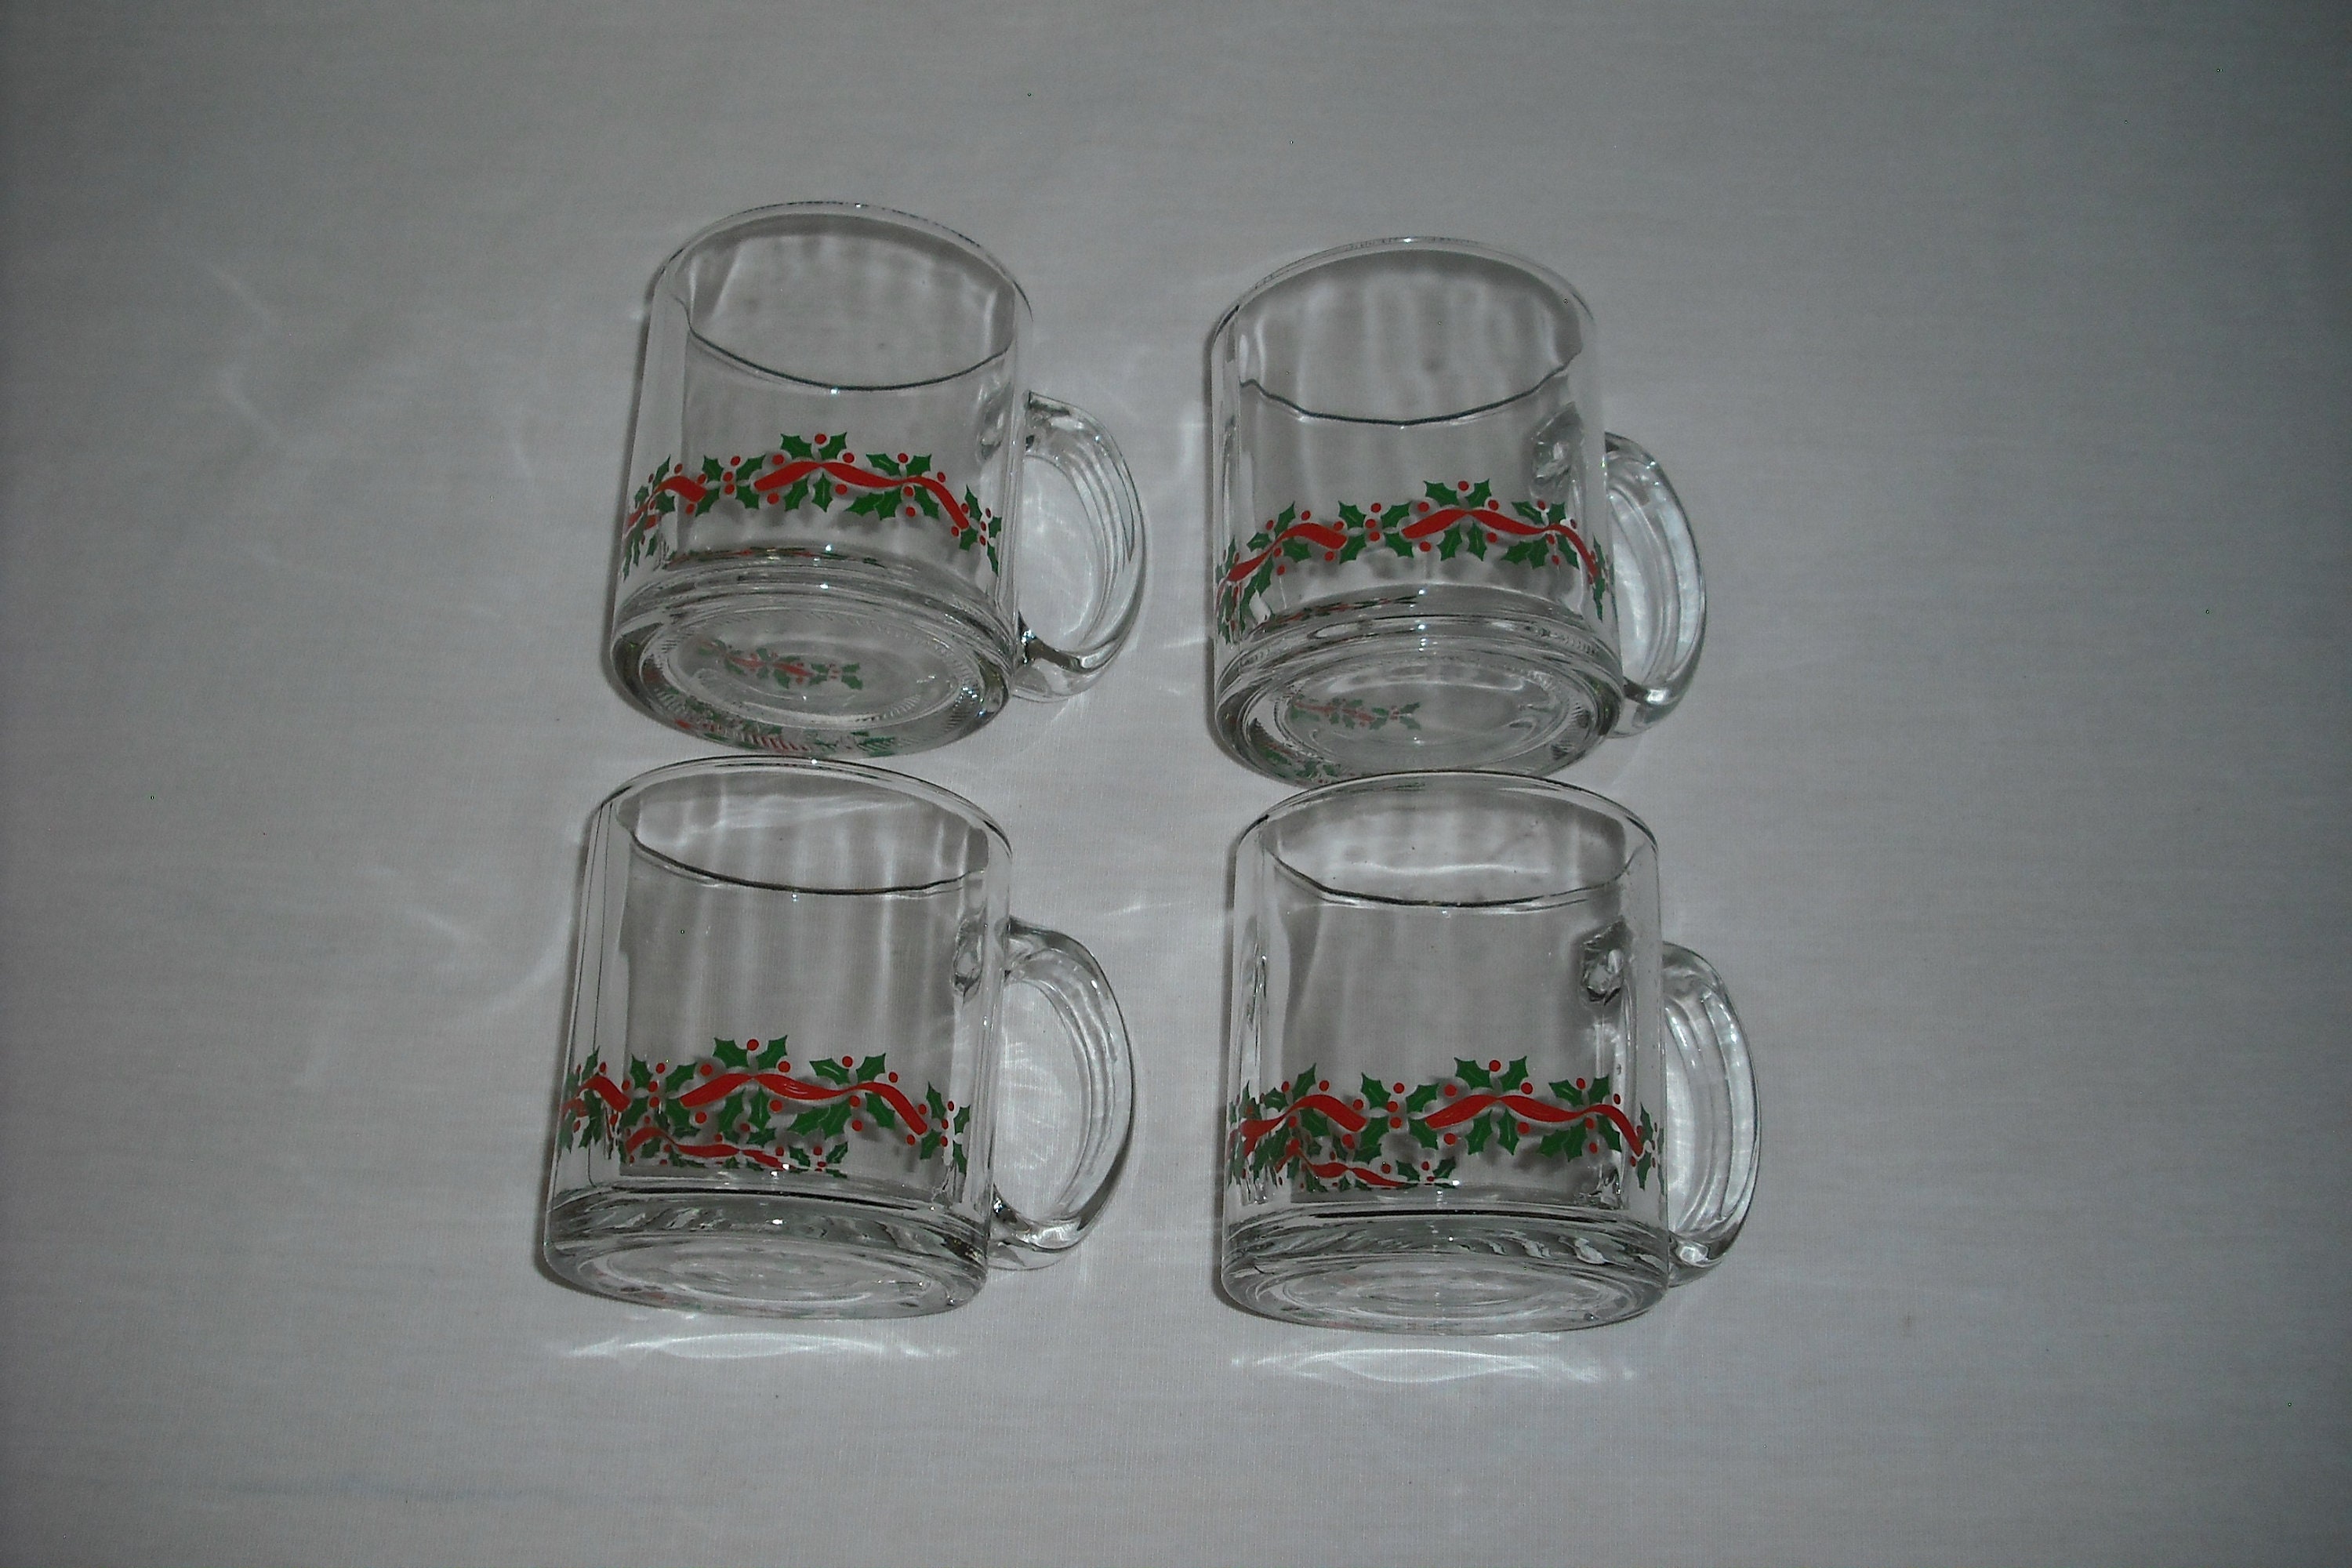 Christmas Drinking Glasses, Eggnog Glass, Eggnogaholic Glass